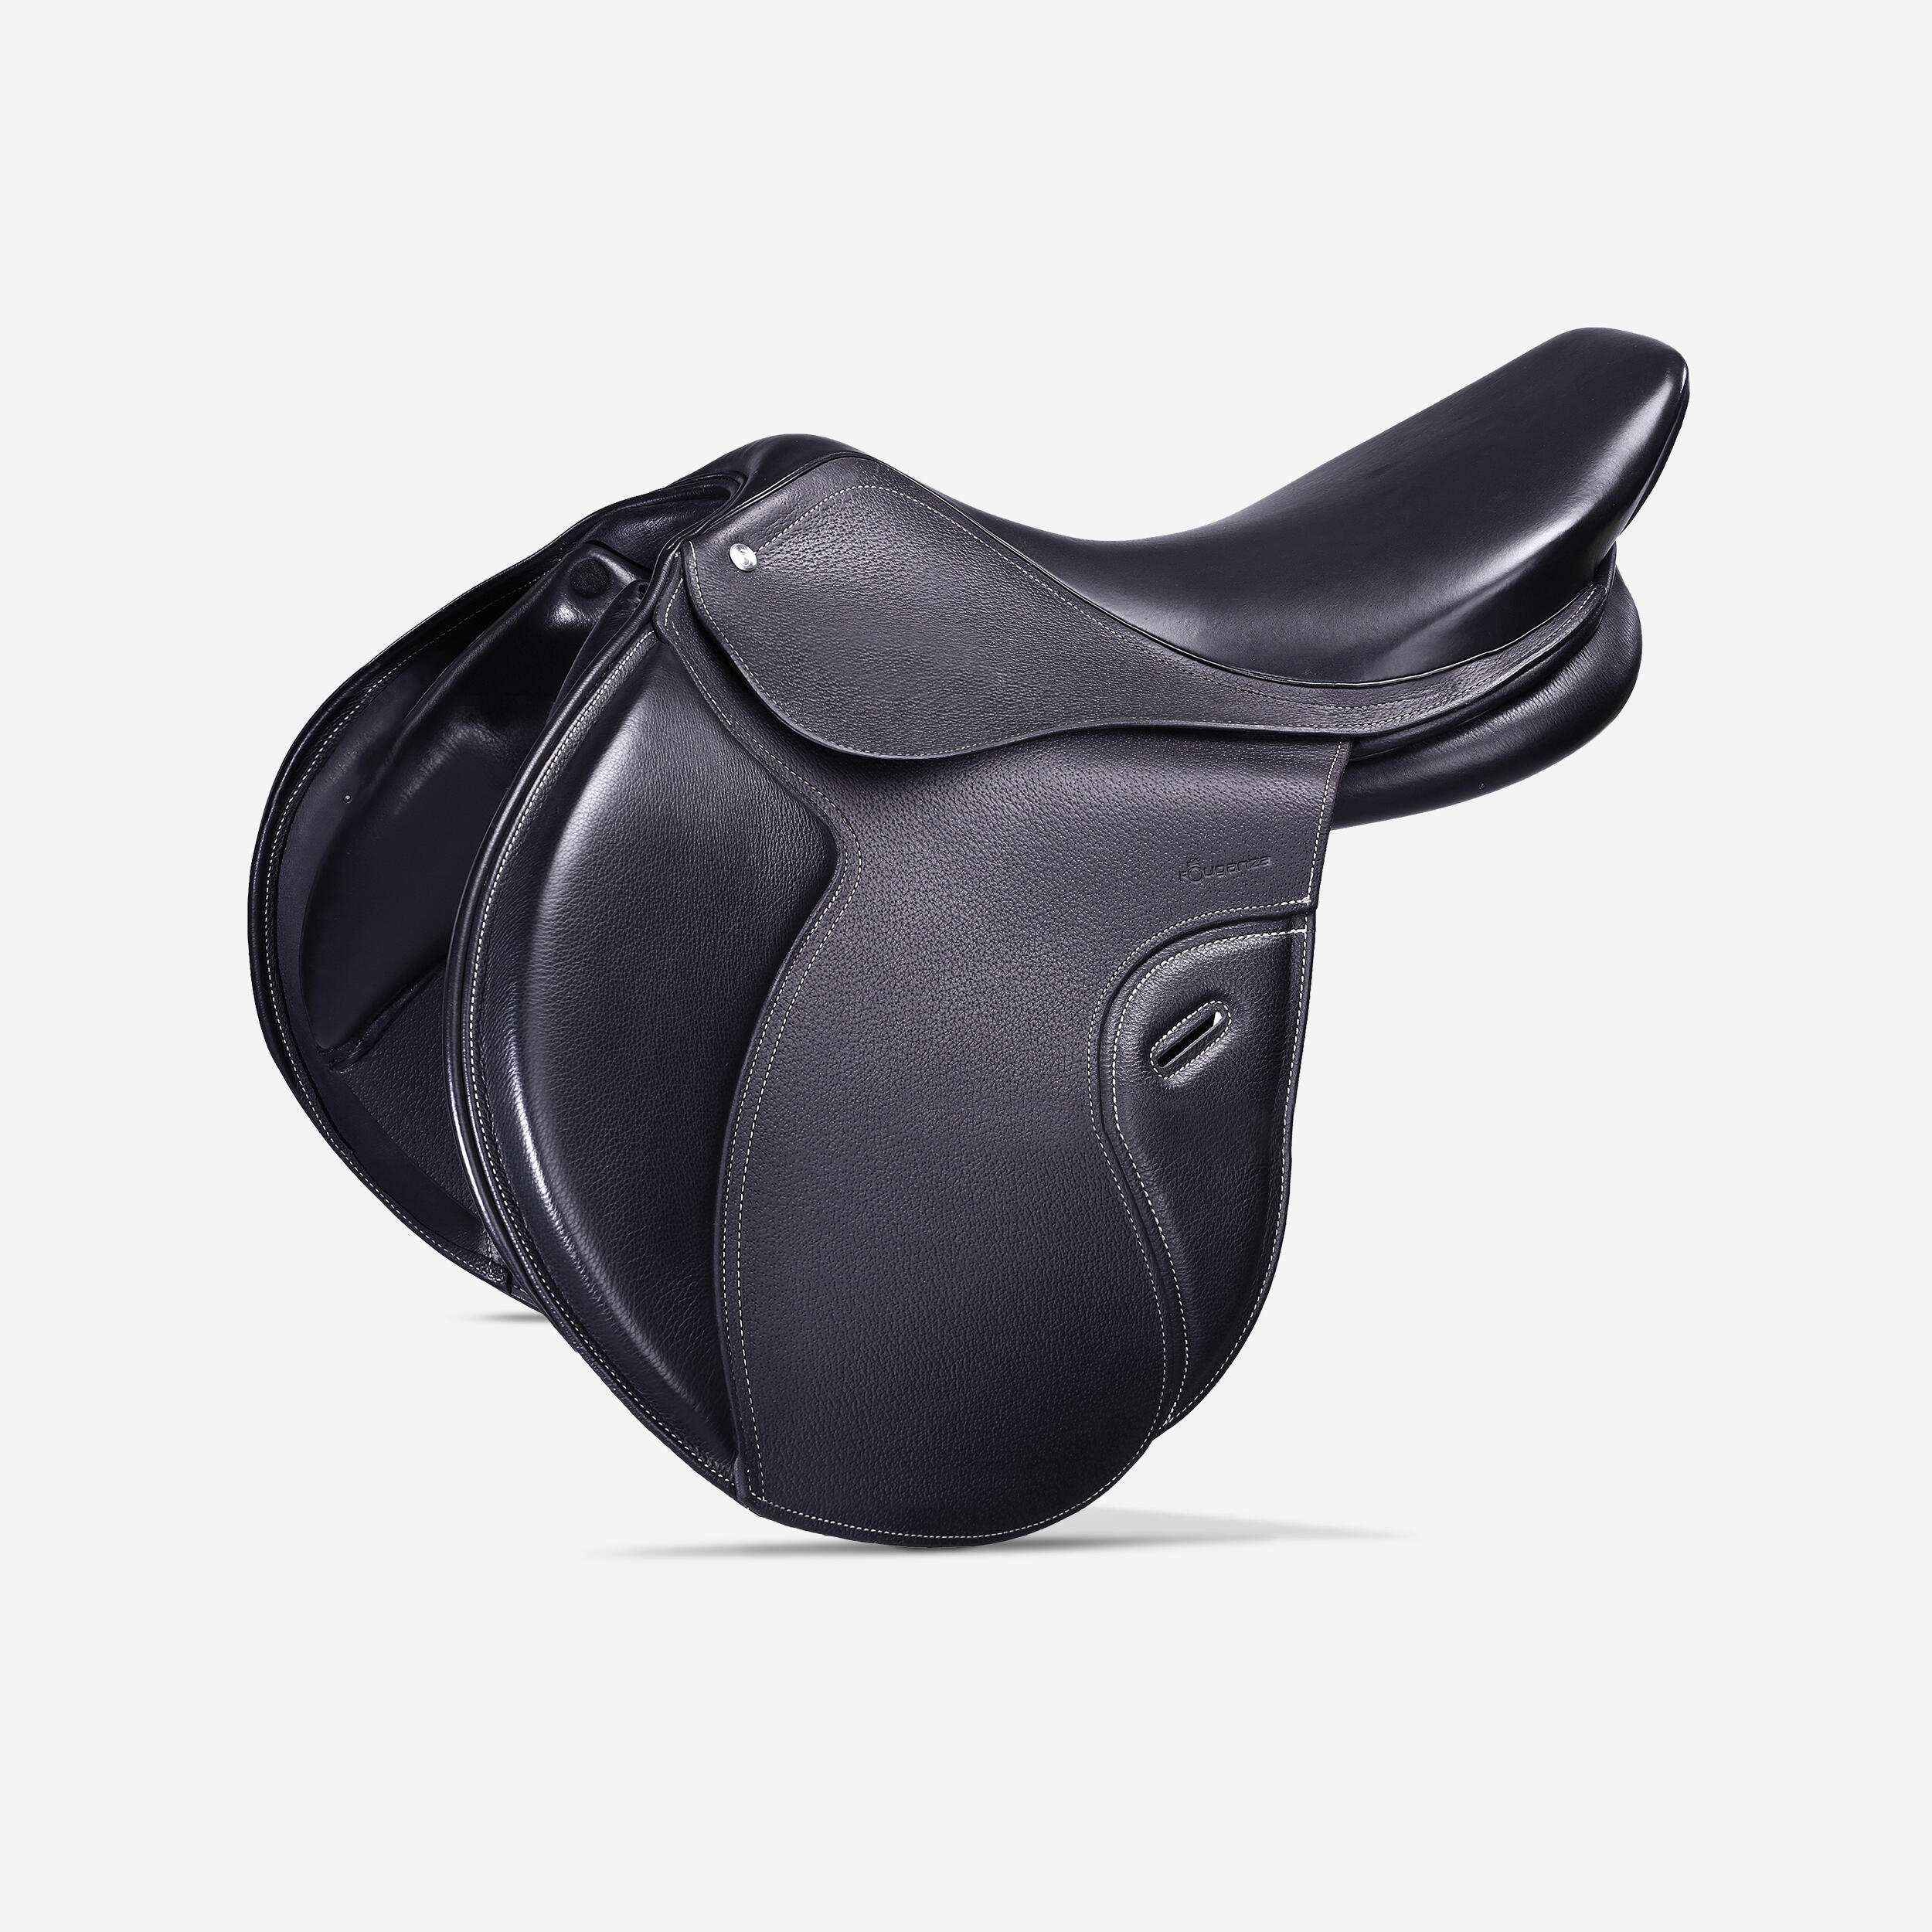 FOUGANZA 17.5" Versatile Leather Horse Riding Saddle for Horse Paddock - Black